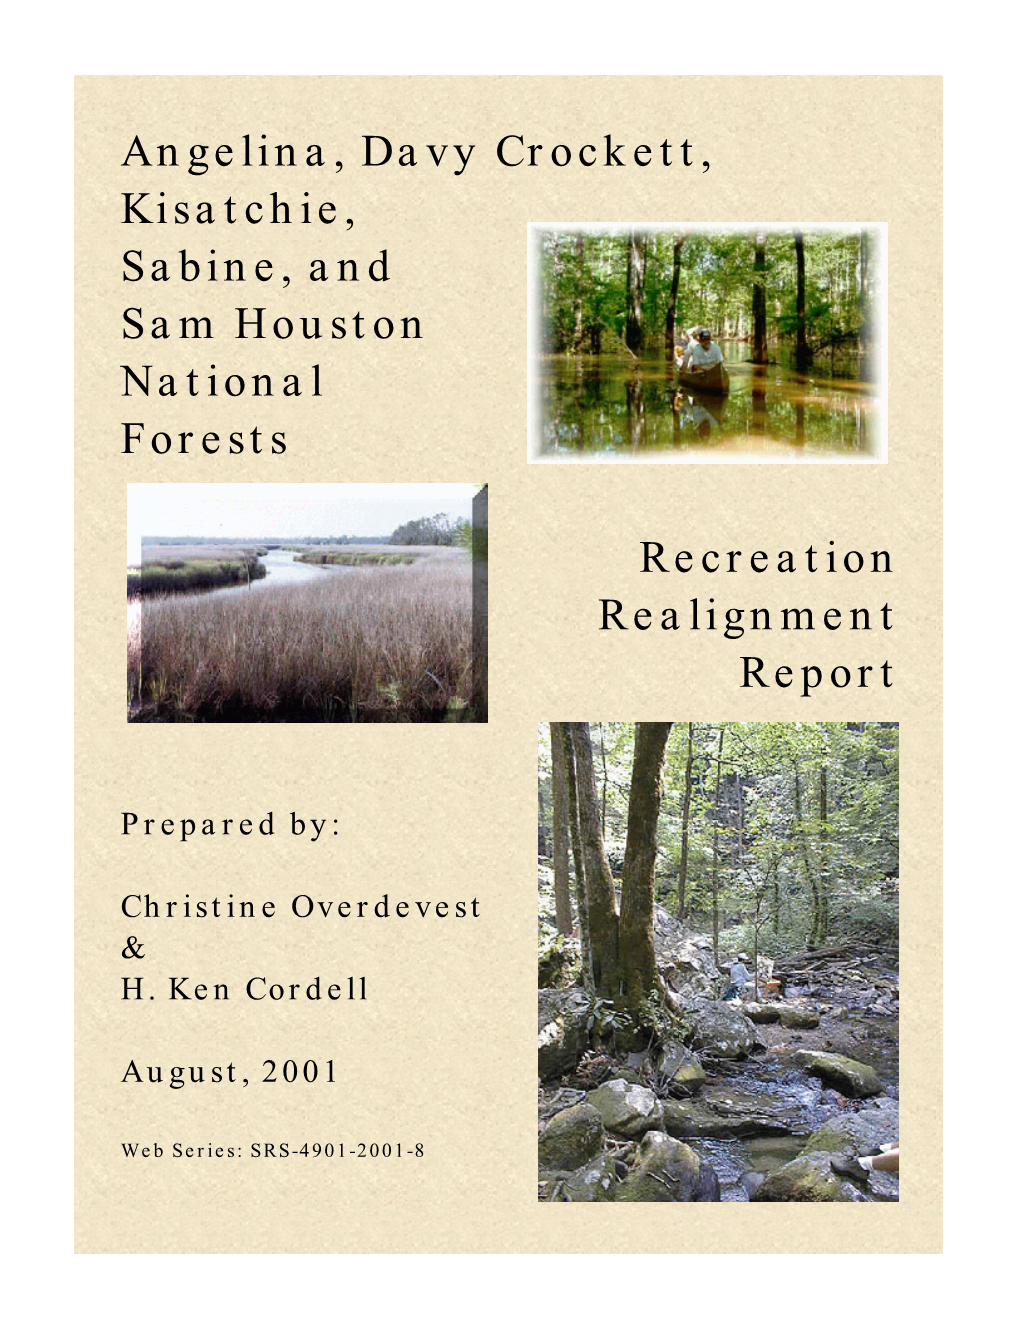 Angelina, Davy Crockett, Kisatchie, Sabine, and Sam Houston National Forests